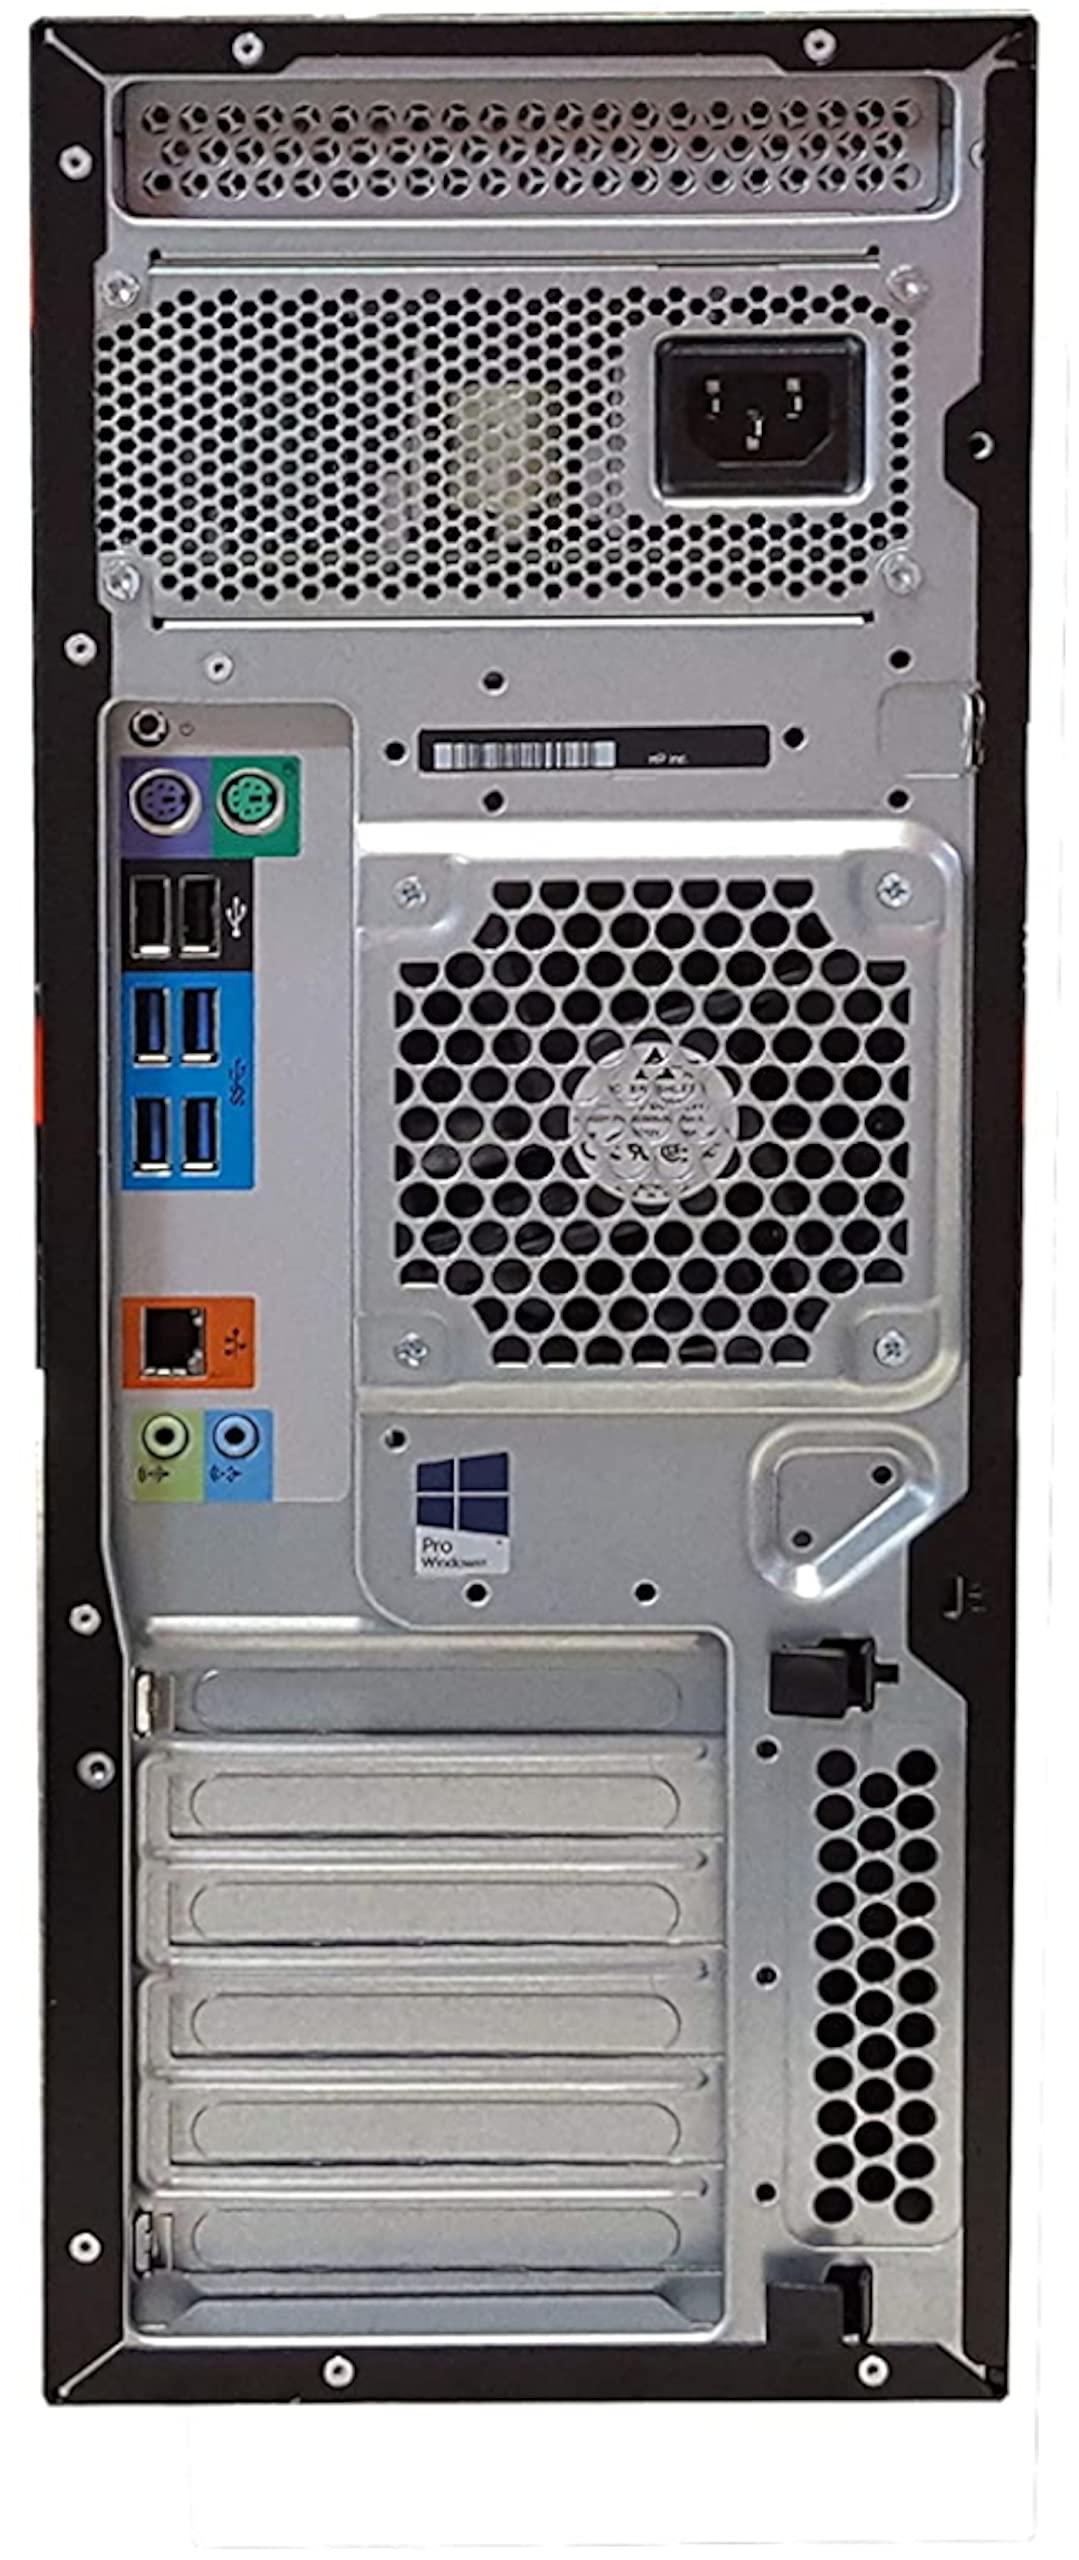 HP Z440 Workstation E5-1620 v3 Quad Core 3.5Ghz 32GB 500GB NVMe M2000 Win 10 (Renewed)